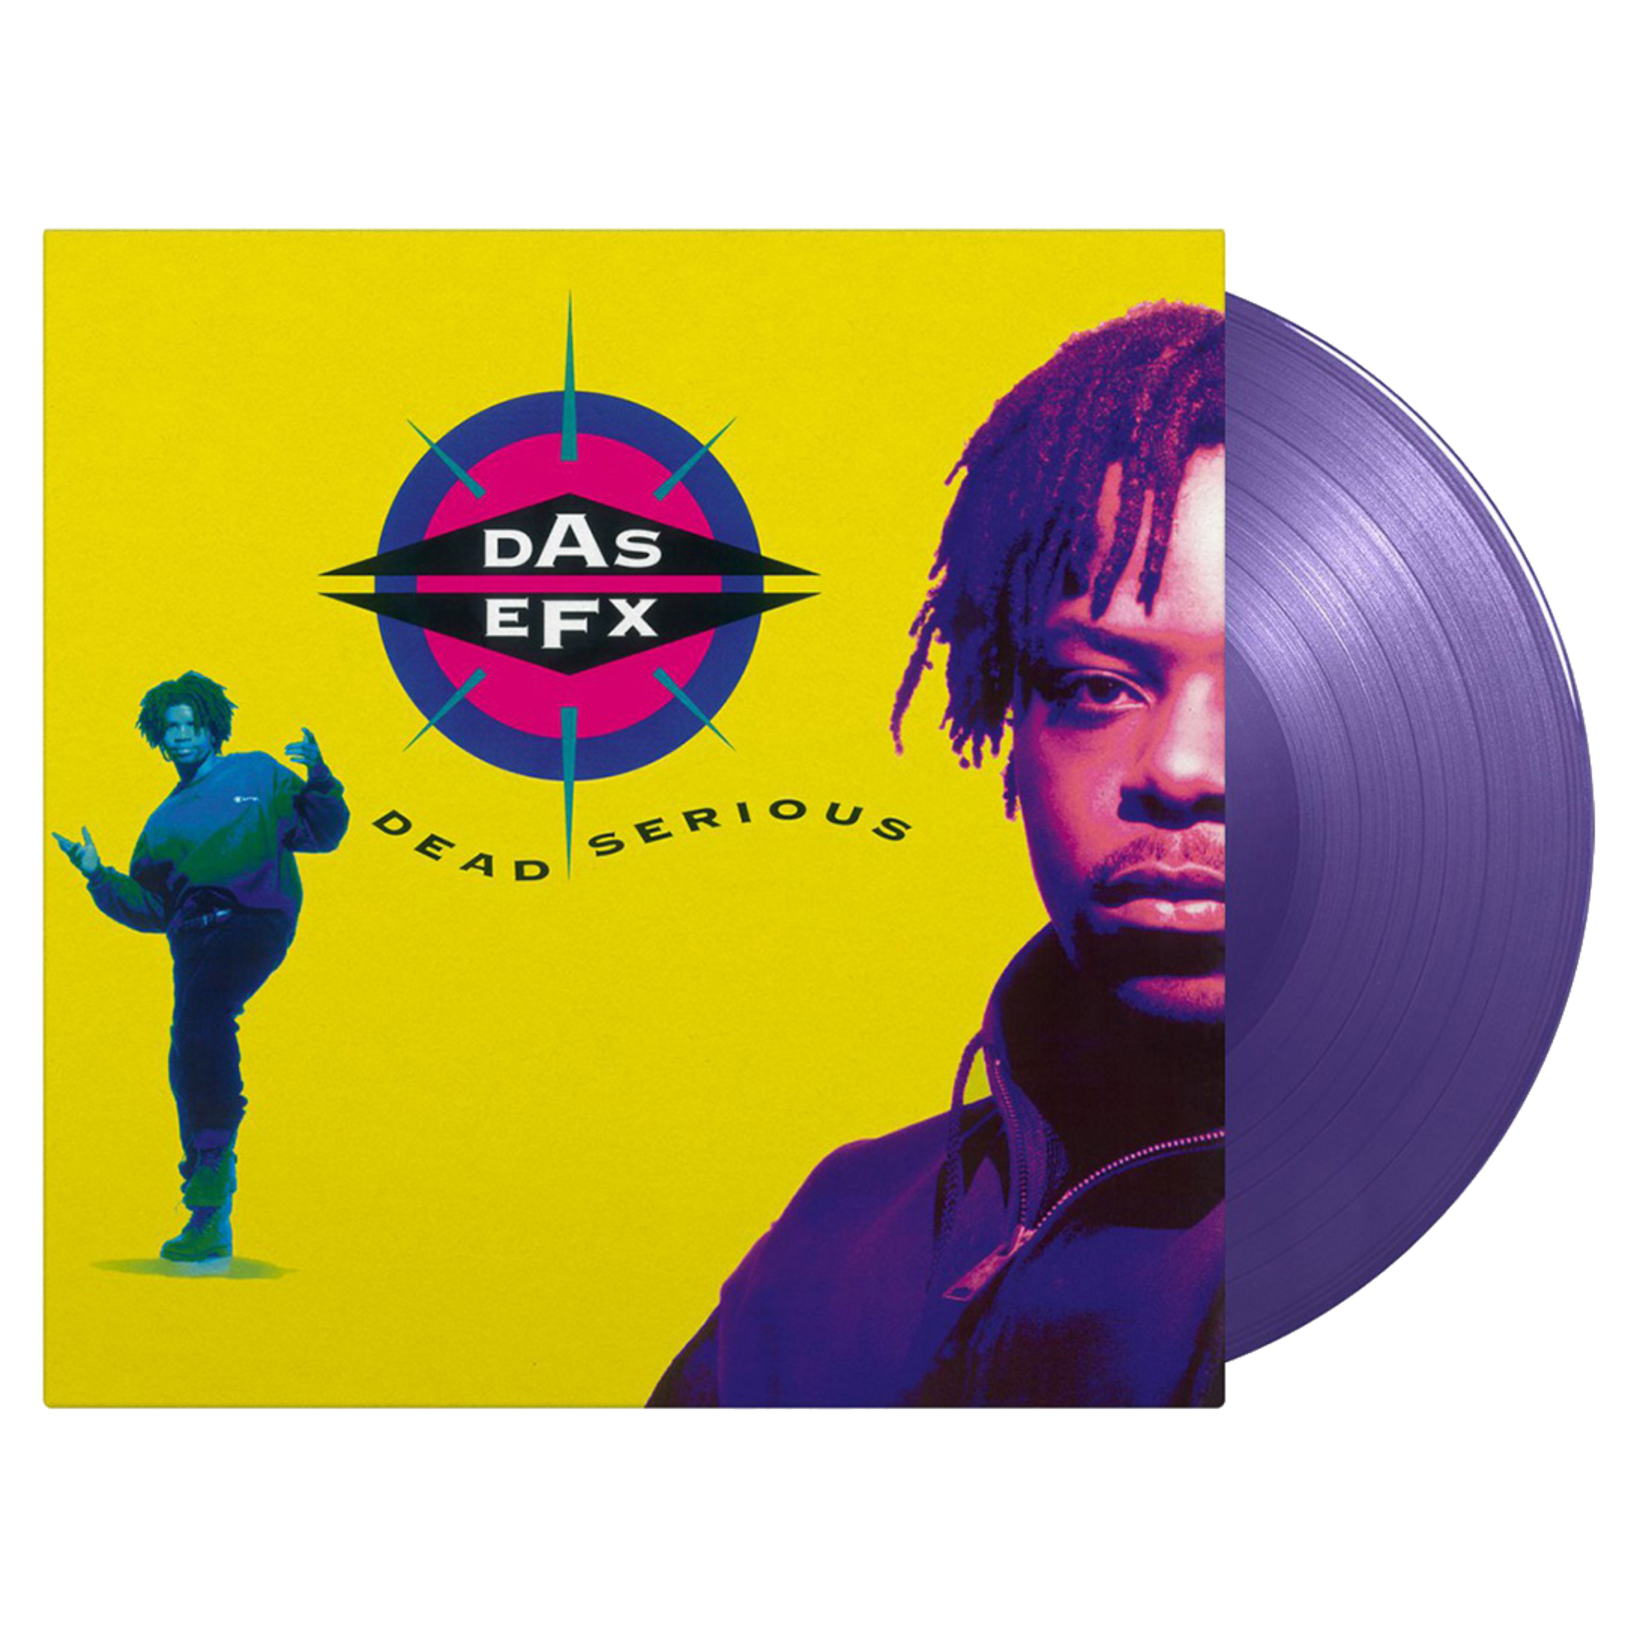 [New] Das Efx - Dead Serious (180g, purple vinyl)